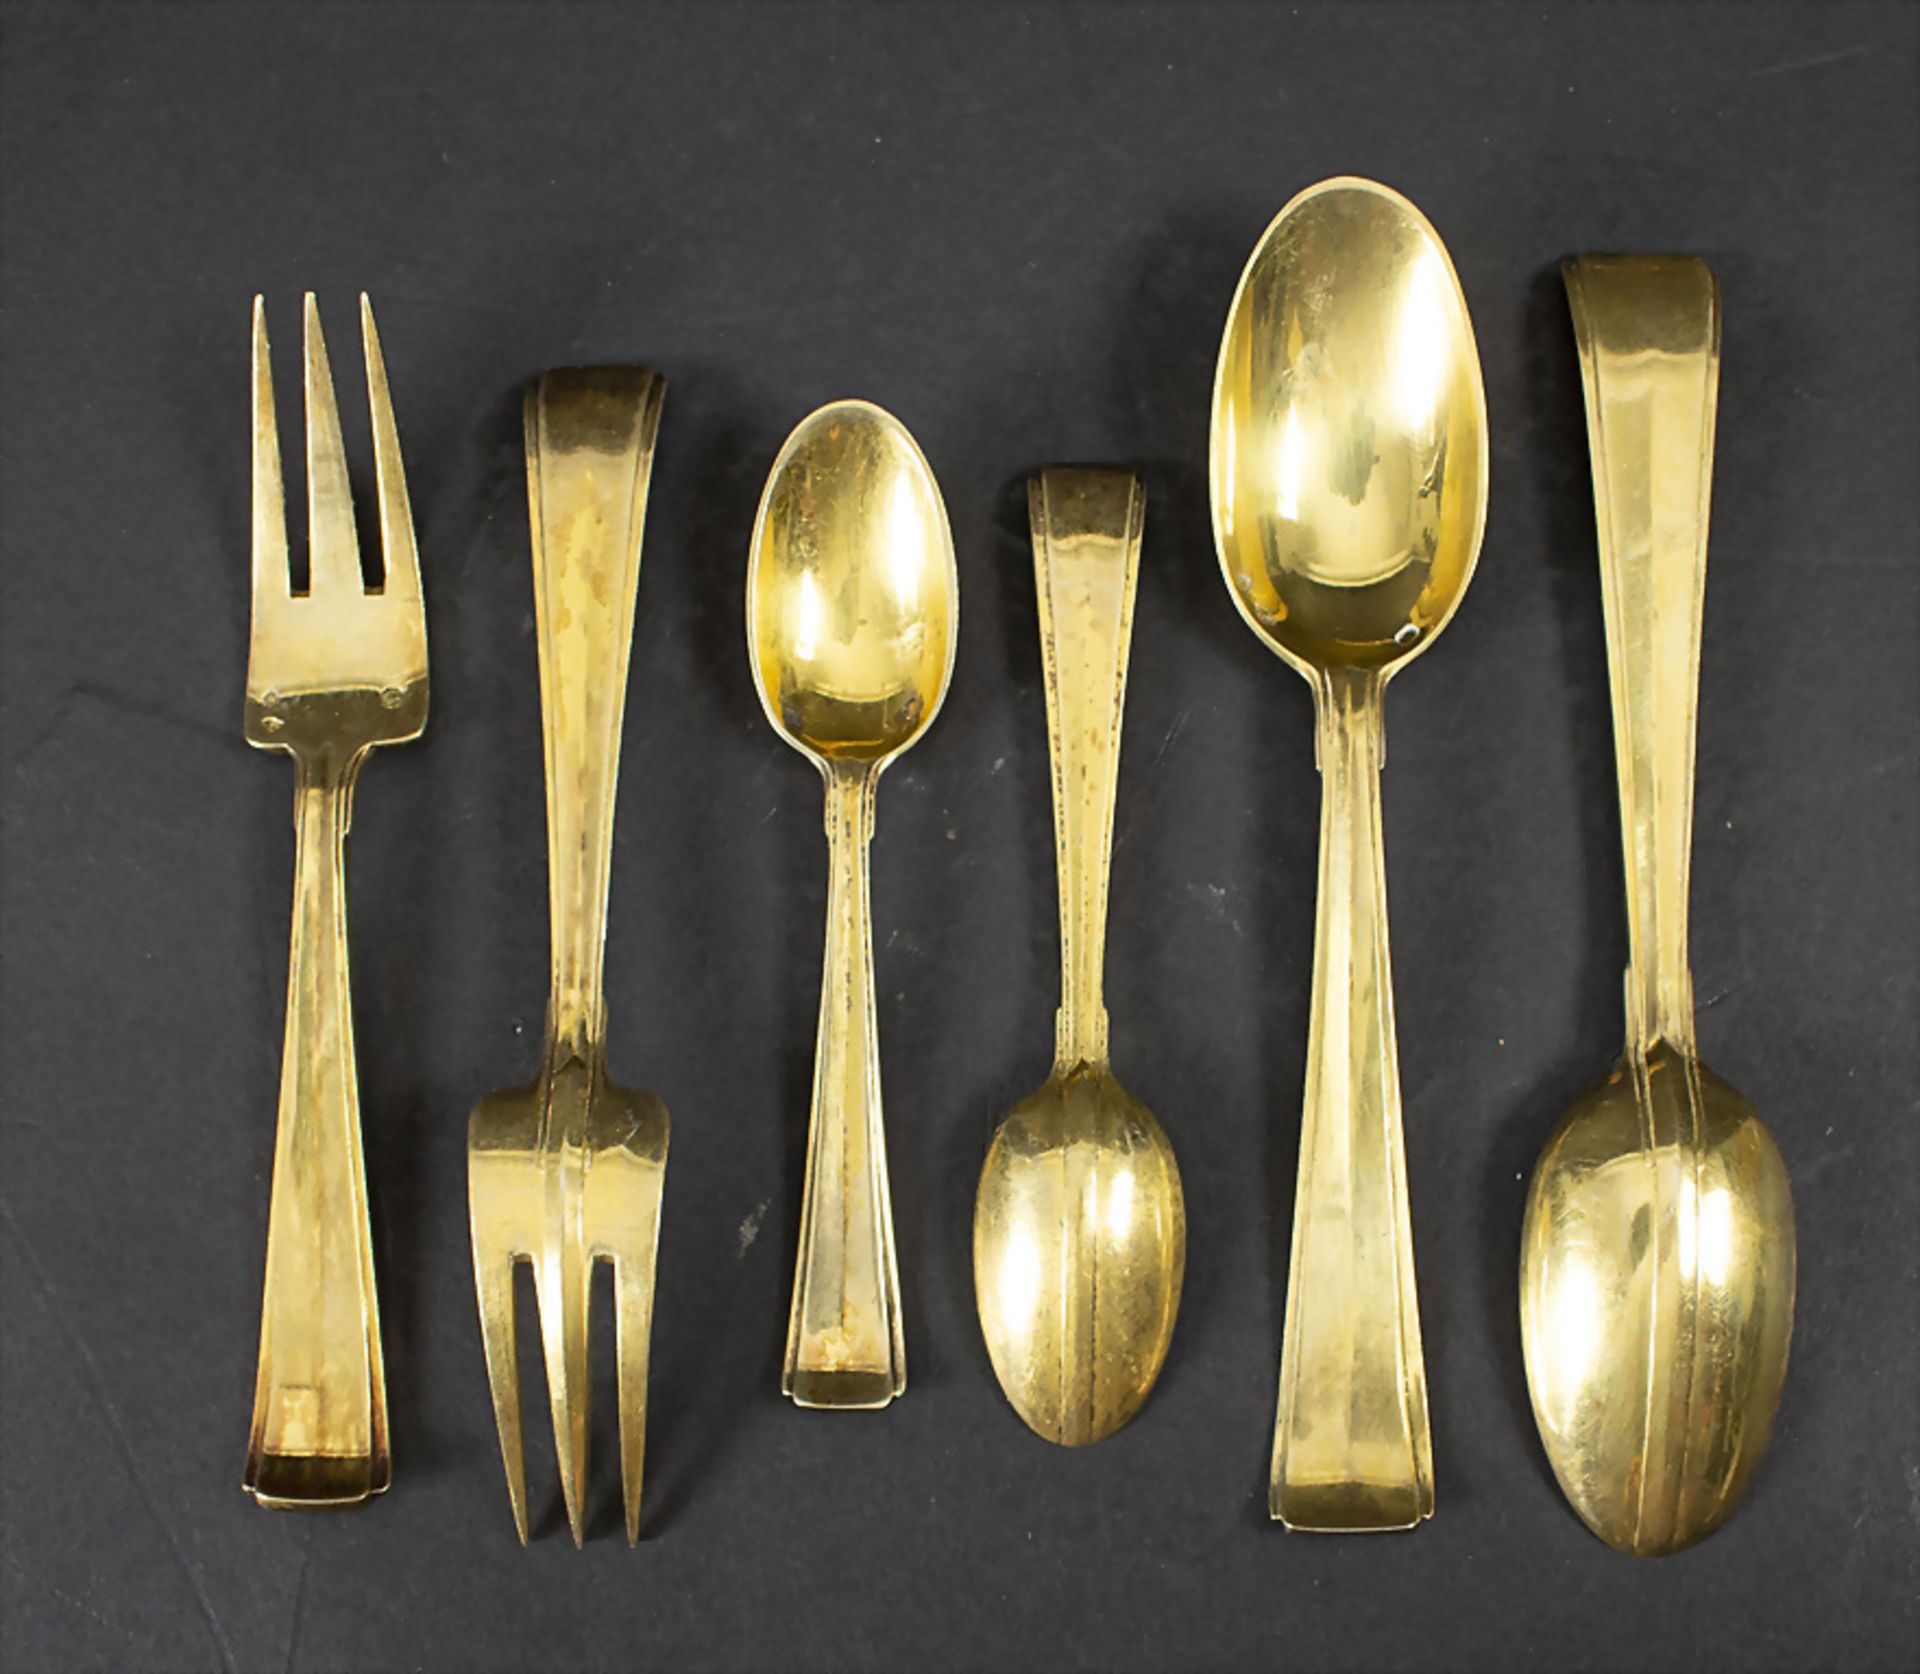 34 tlg. Silber-Besteck / 34 pieces of silver cutlery, Orfèvre Christofle, Paris, 20. Jh. - Bild 2 aus 6